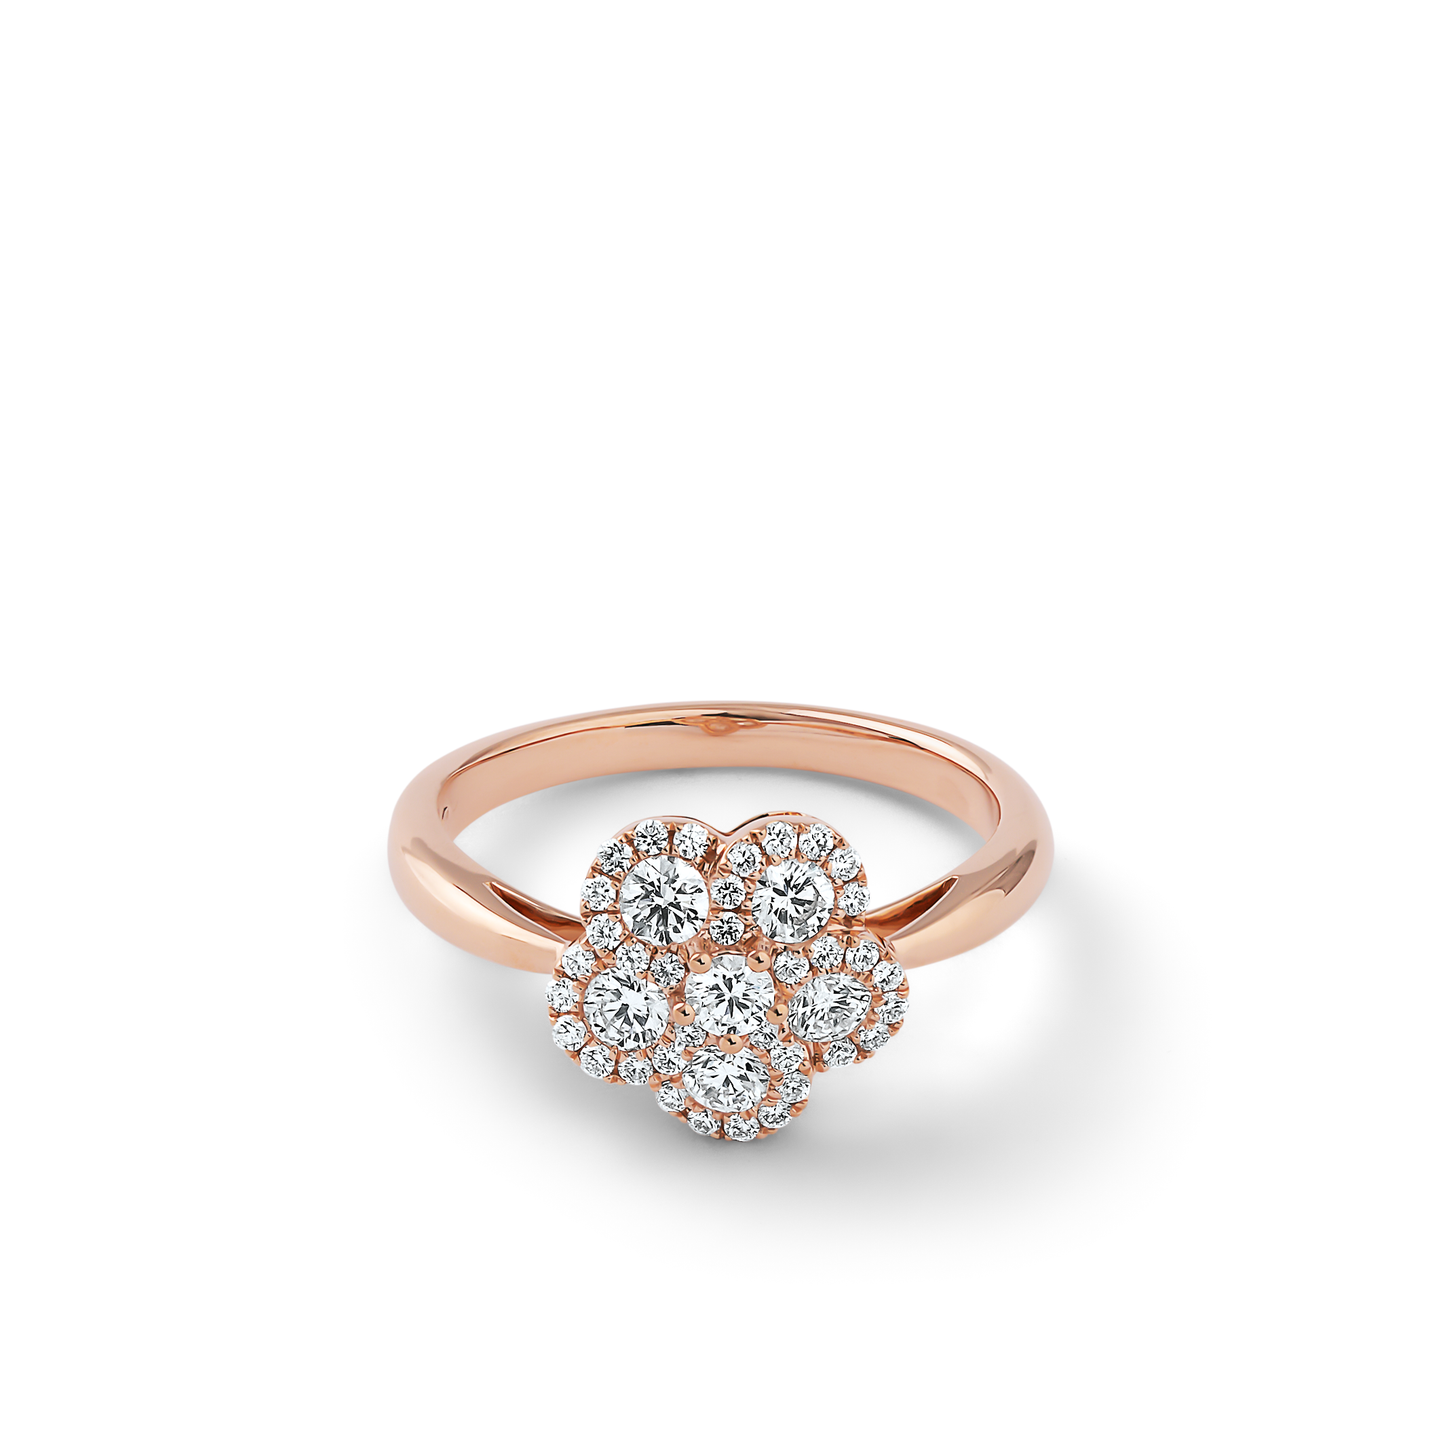 Oliver Heemeyer Alemandro diamond ring 5 in 18k rose gold.